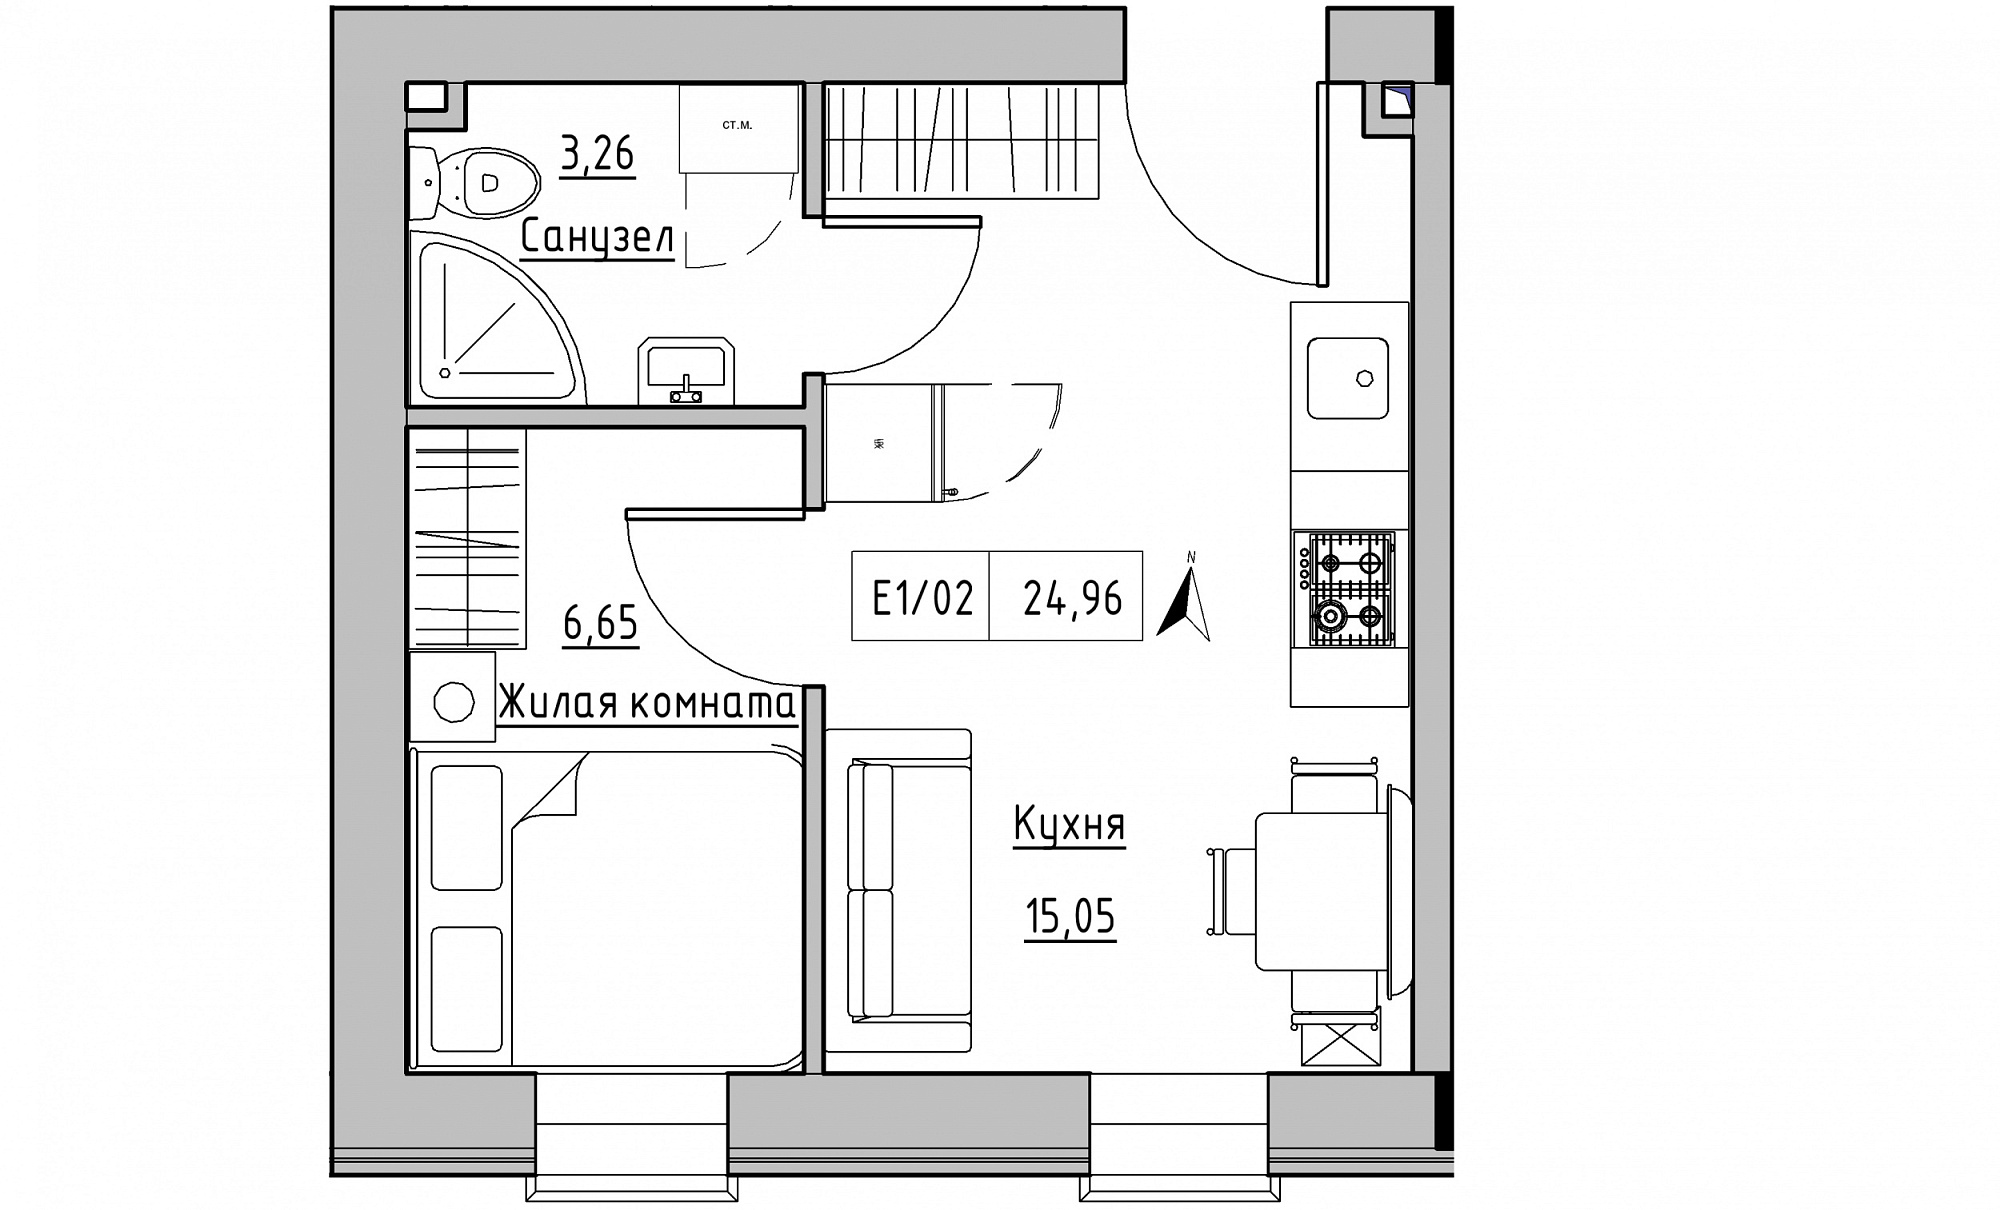 Planning 1-rm flats area 24.96m2, KS-015-02/0012.